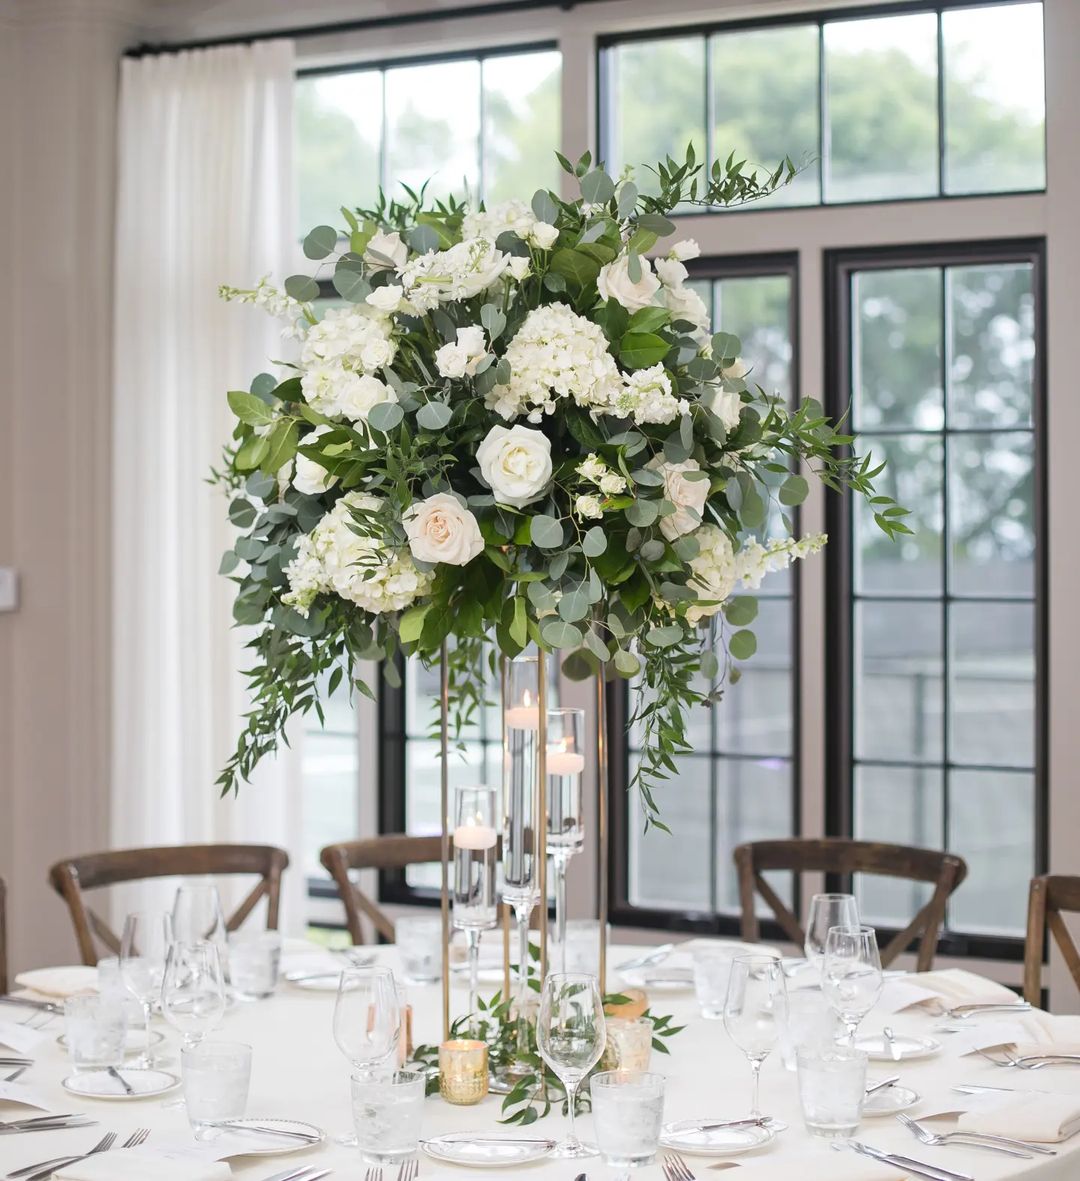 tall greenery and white flowers wedding centerp via flowersbykh